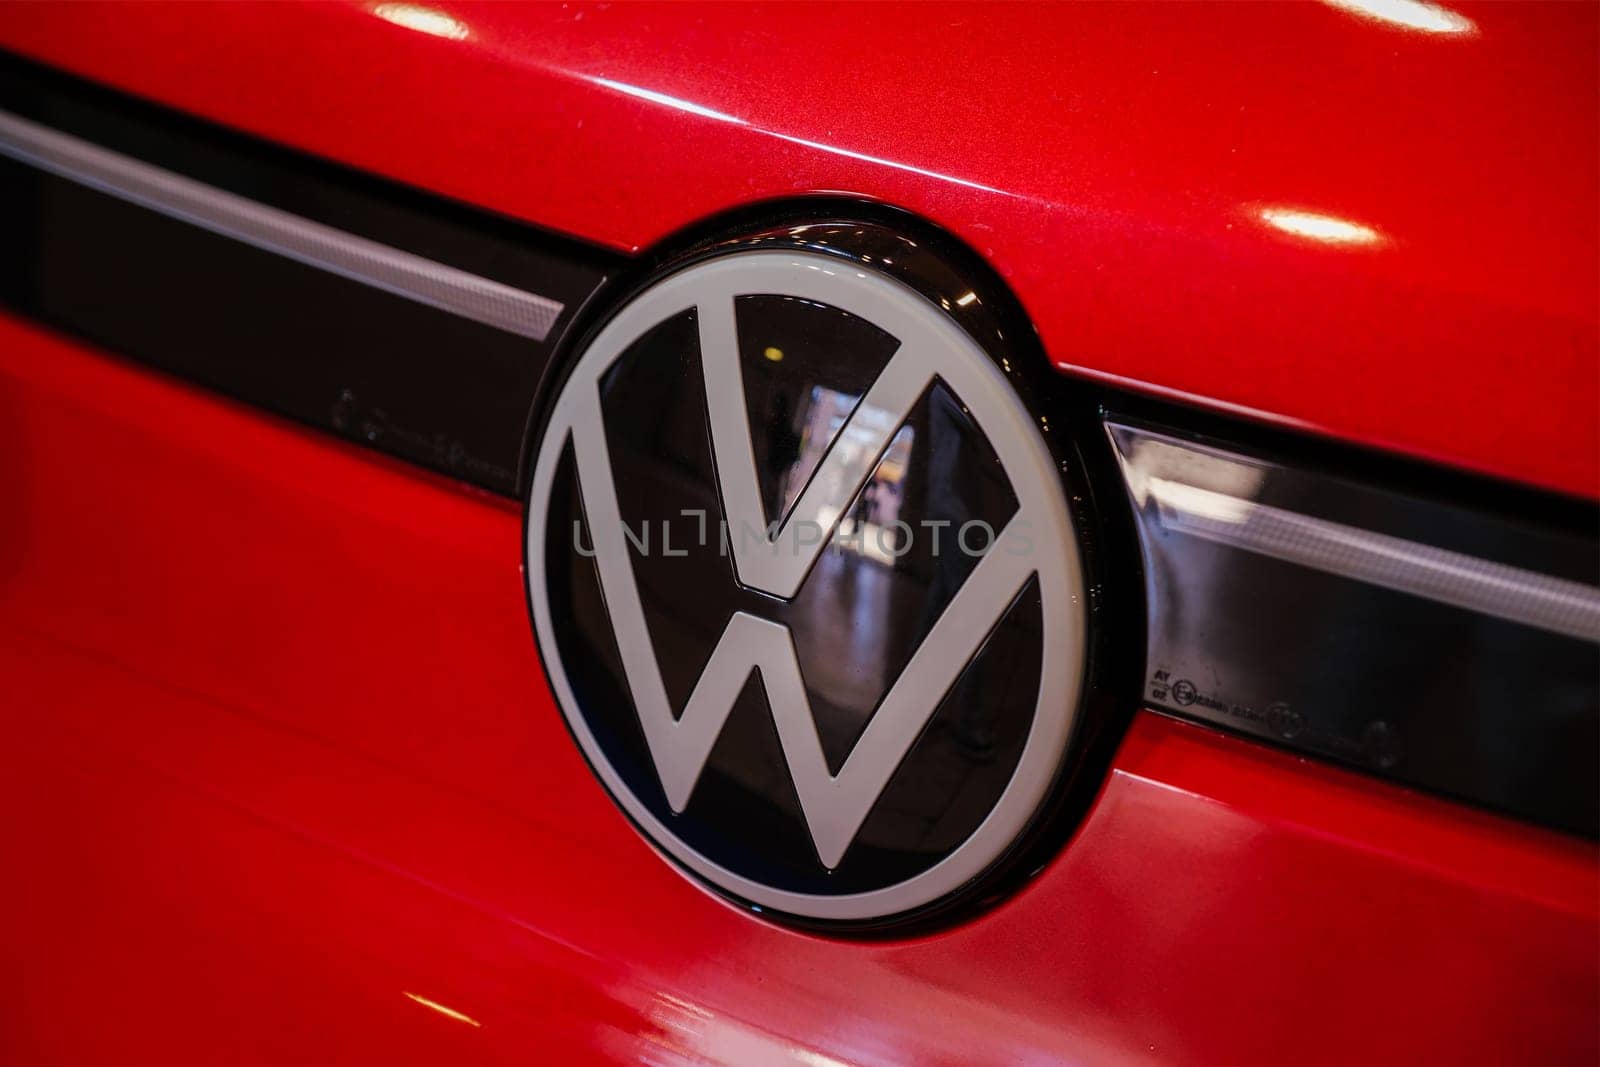 VW car logo emblem close up by dimol